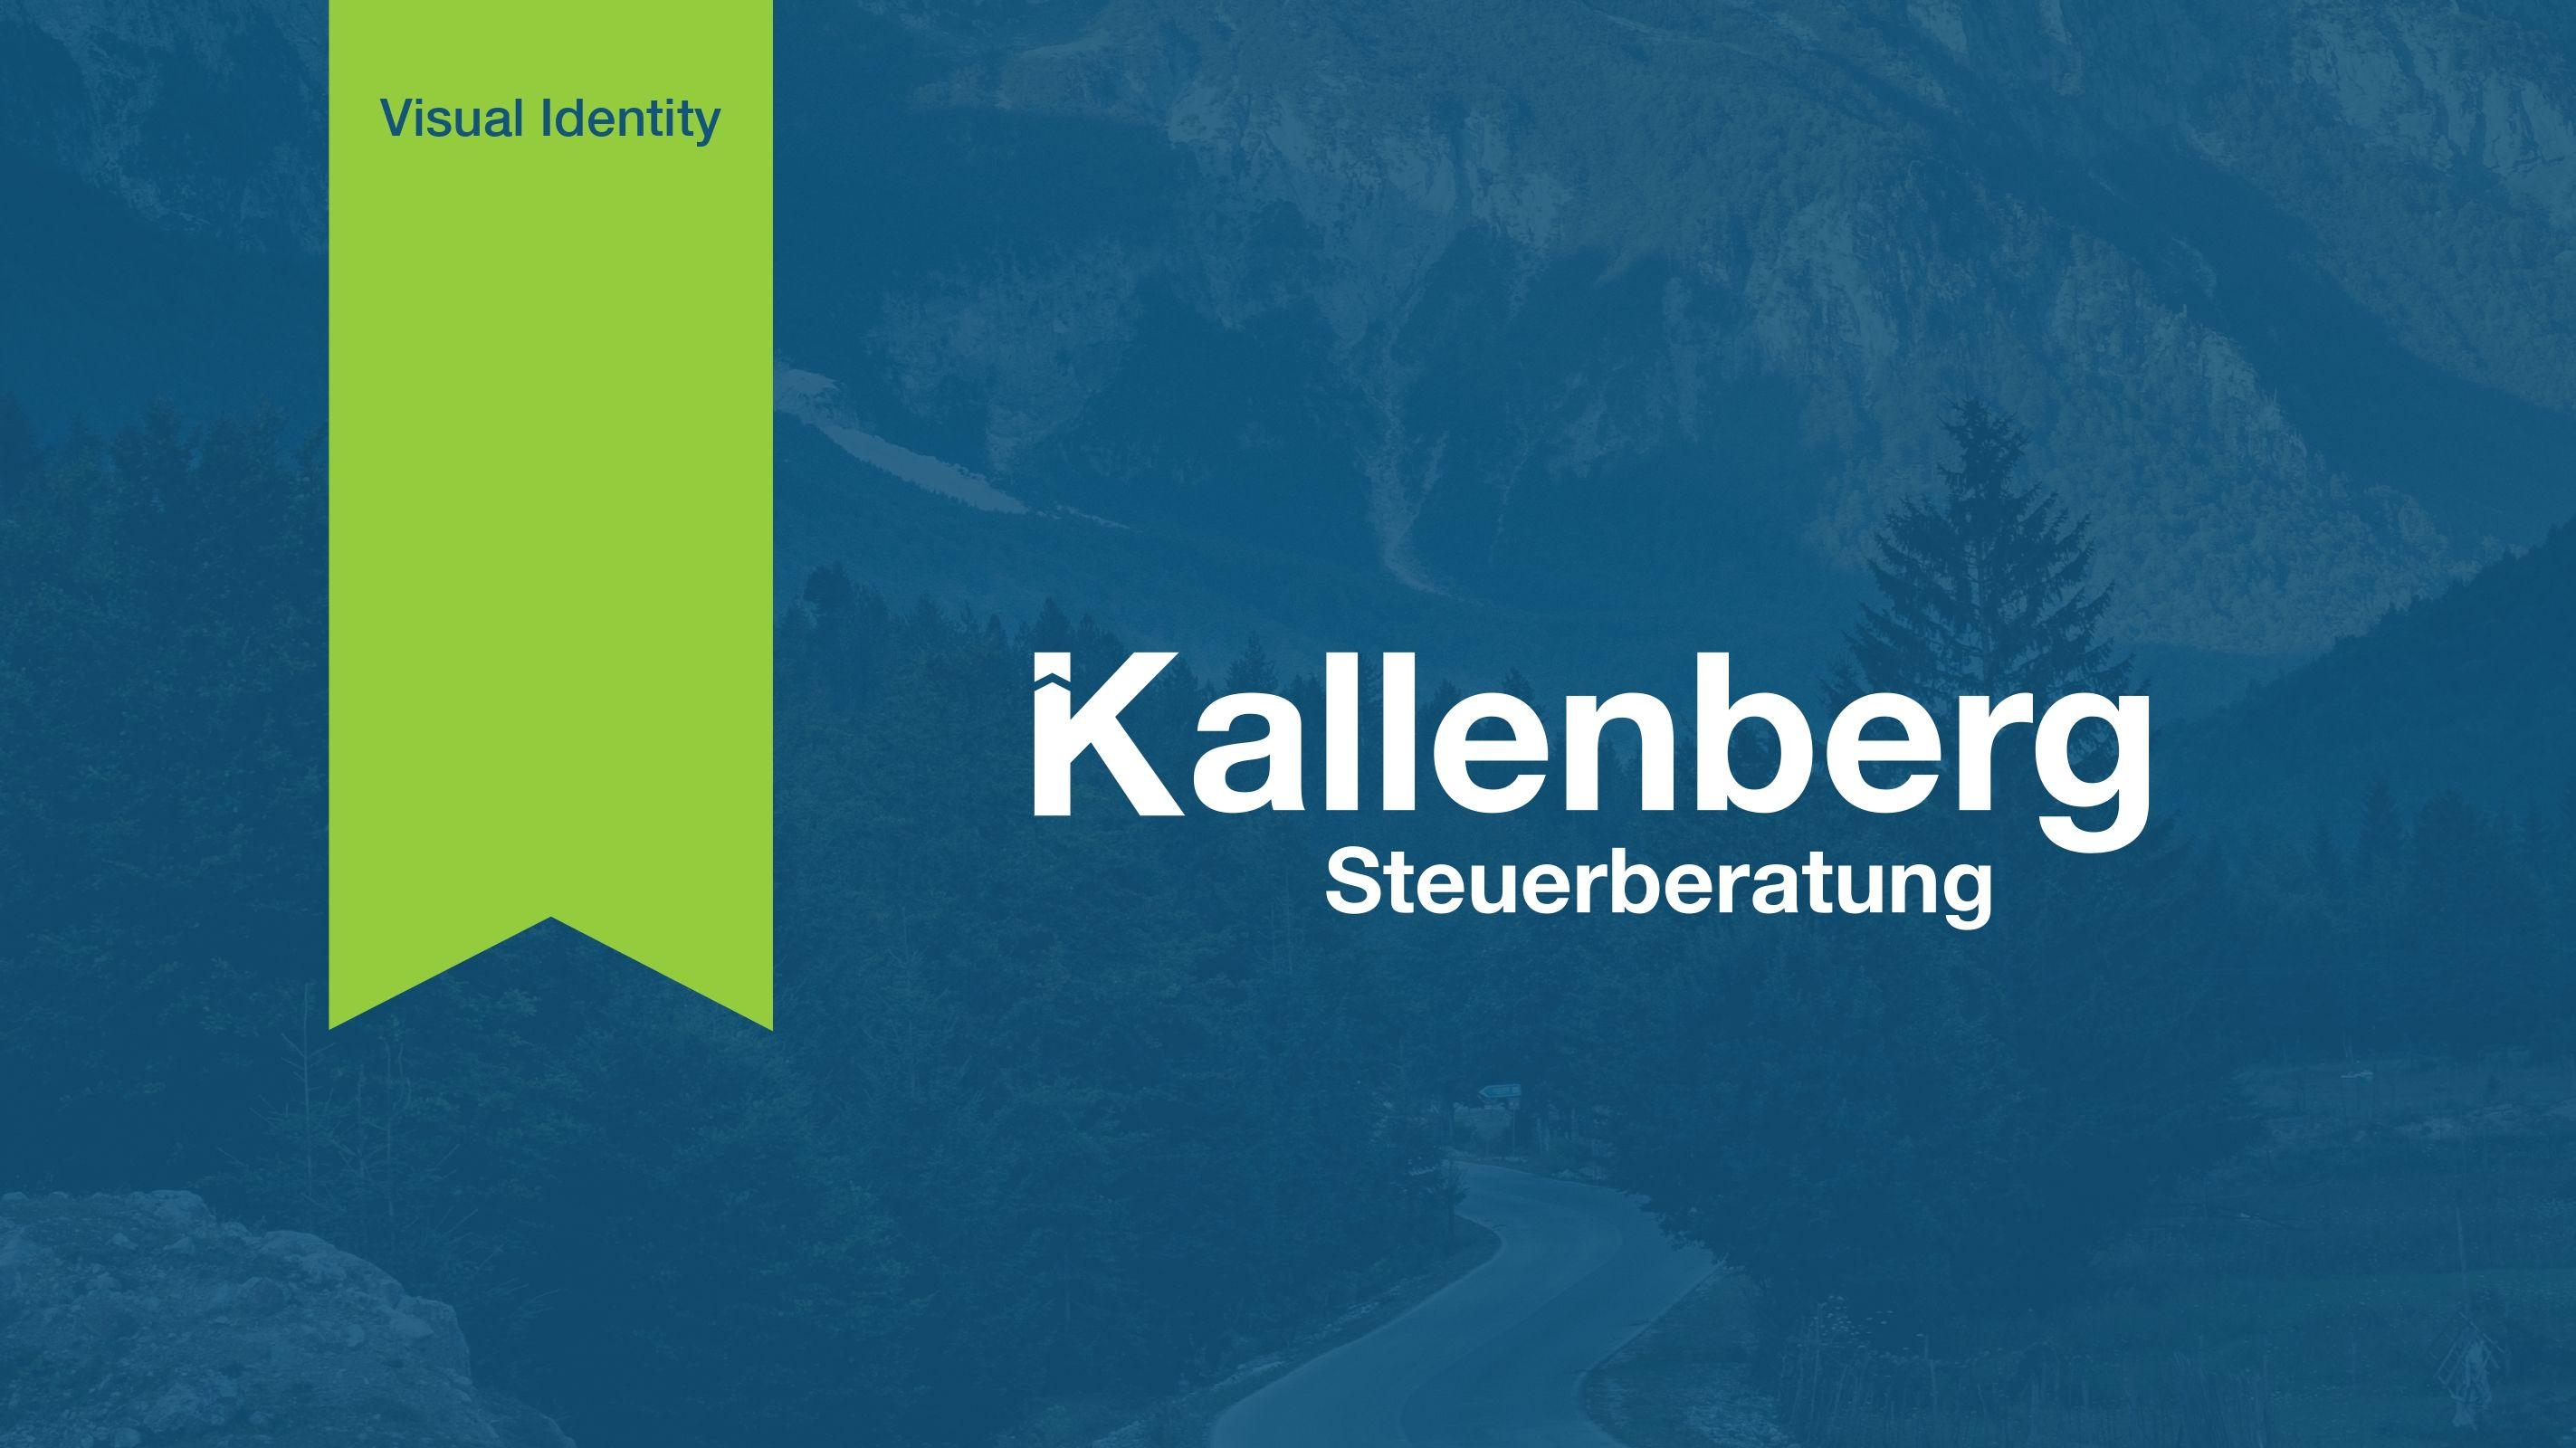 Kallenberg Steuerberatung - Visual Identity_page-0001.jpg